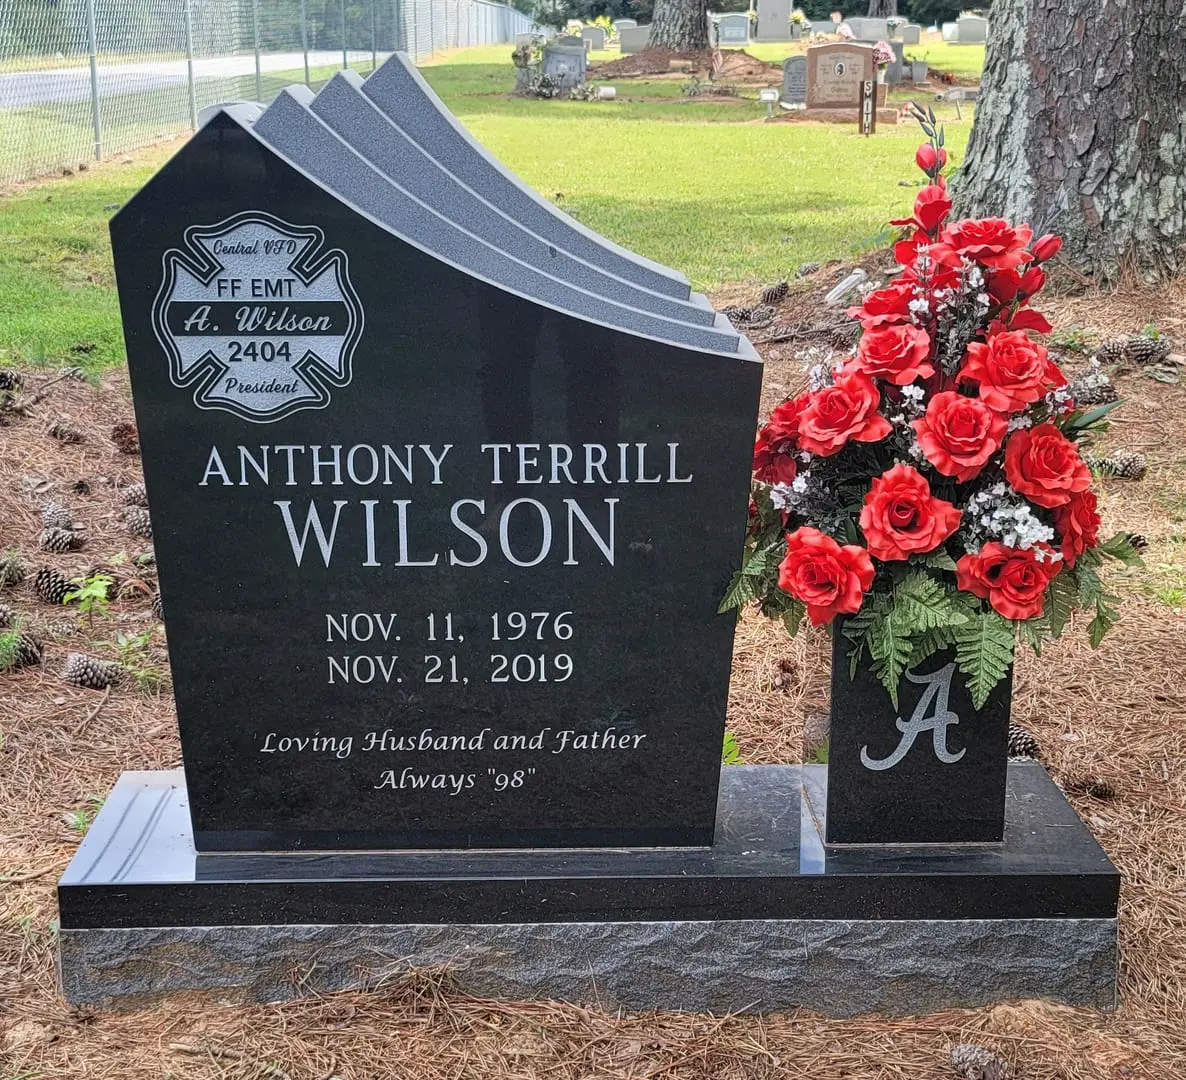 Anthony Terrill Wilson Memorial Block in Black